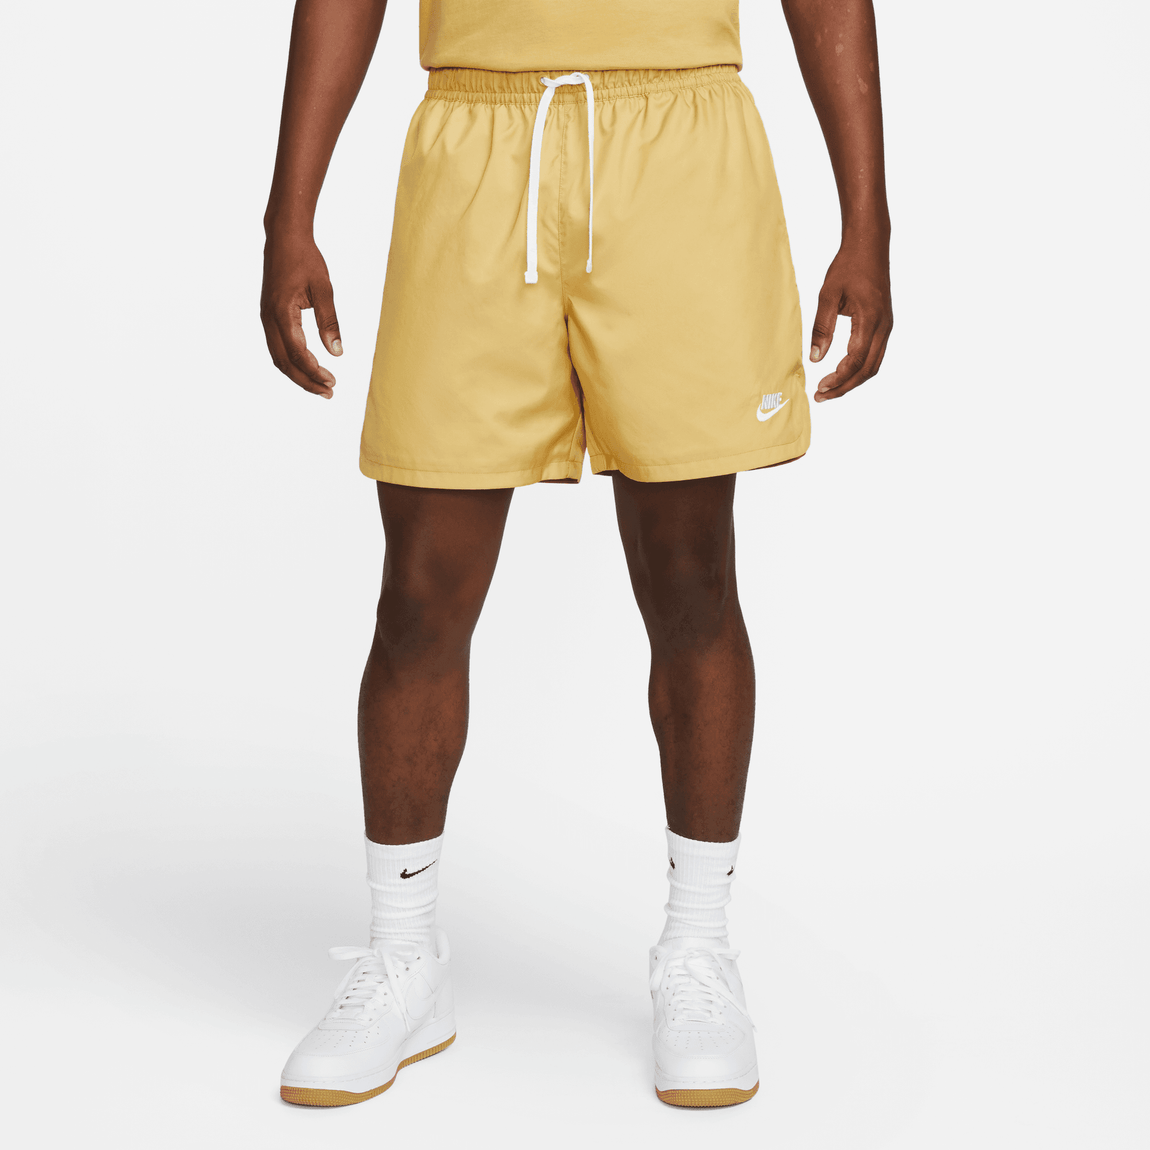 Nike Sportswear Sport Essentials Shorts (Wheat Gold/White) - Nike Sportswear Sport Essentials Shorts (Wheat Gold/White) - 